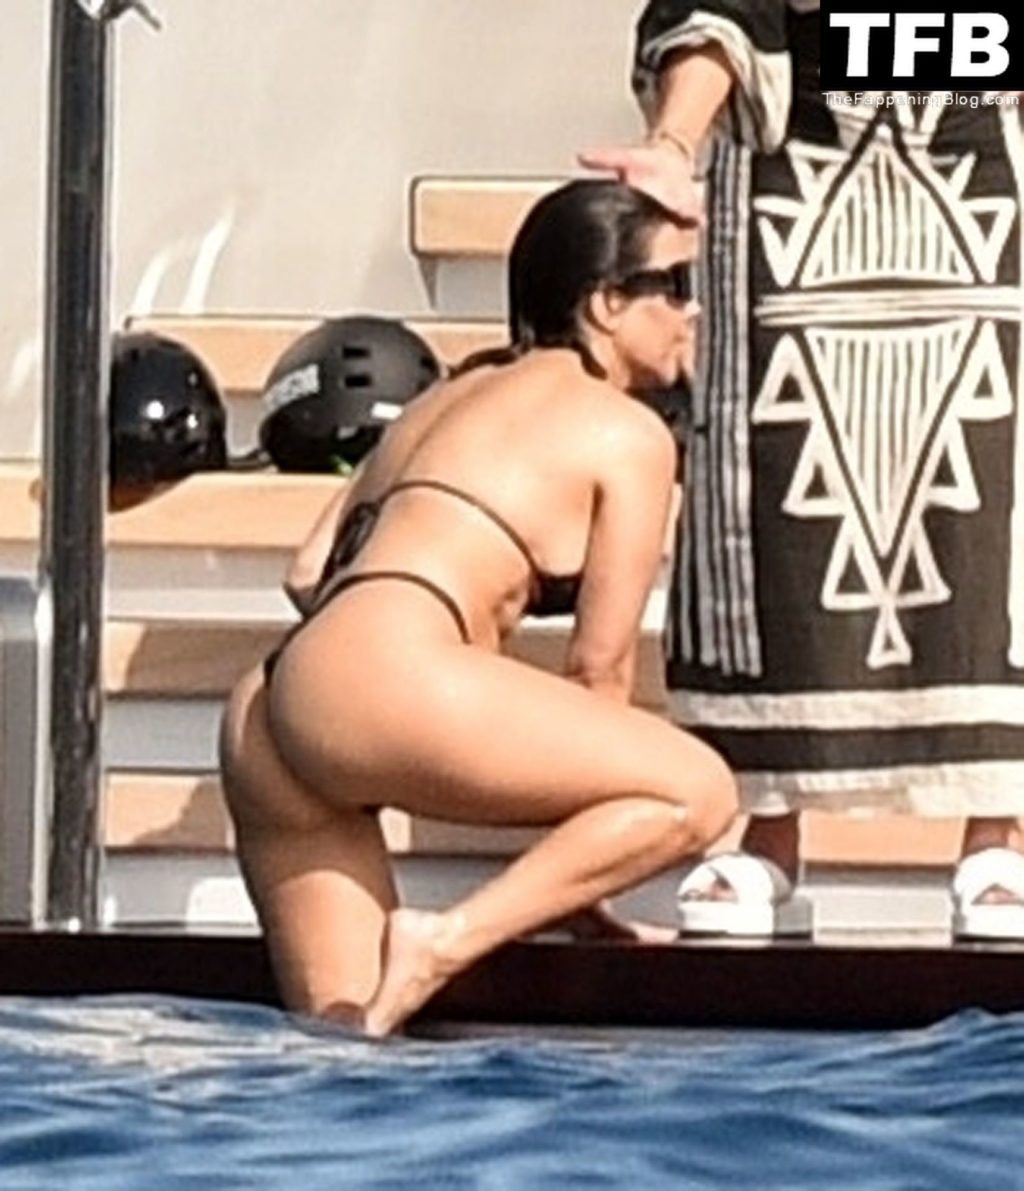 Kourtney Kardashian Sexy The Fappening Blog 1 1 1024x1191 - Kourtney Kardashian Shows Off Her Toned Bikini Body While Enjoying Some Quality Time with Travis Barker (48 Photos)